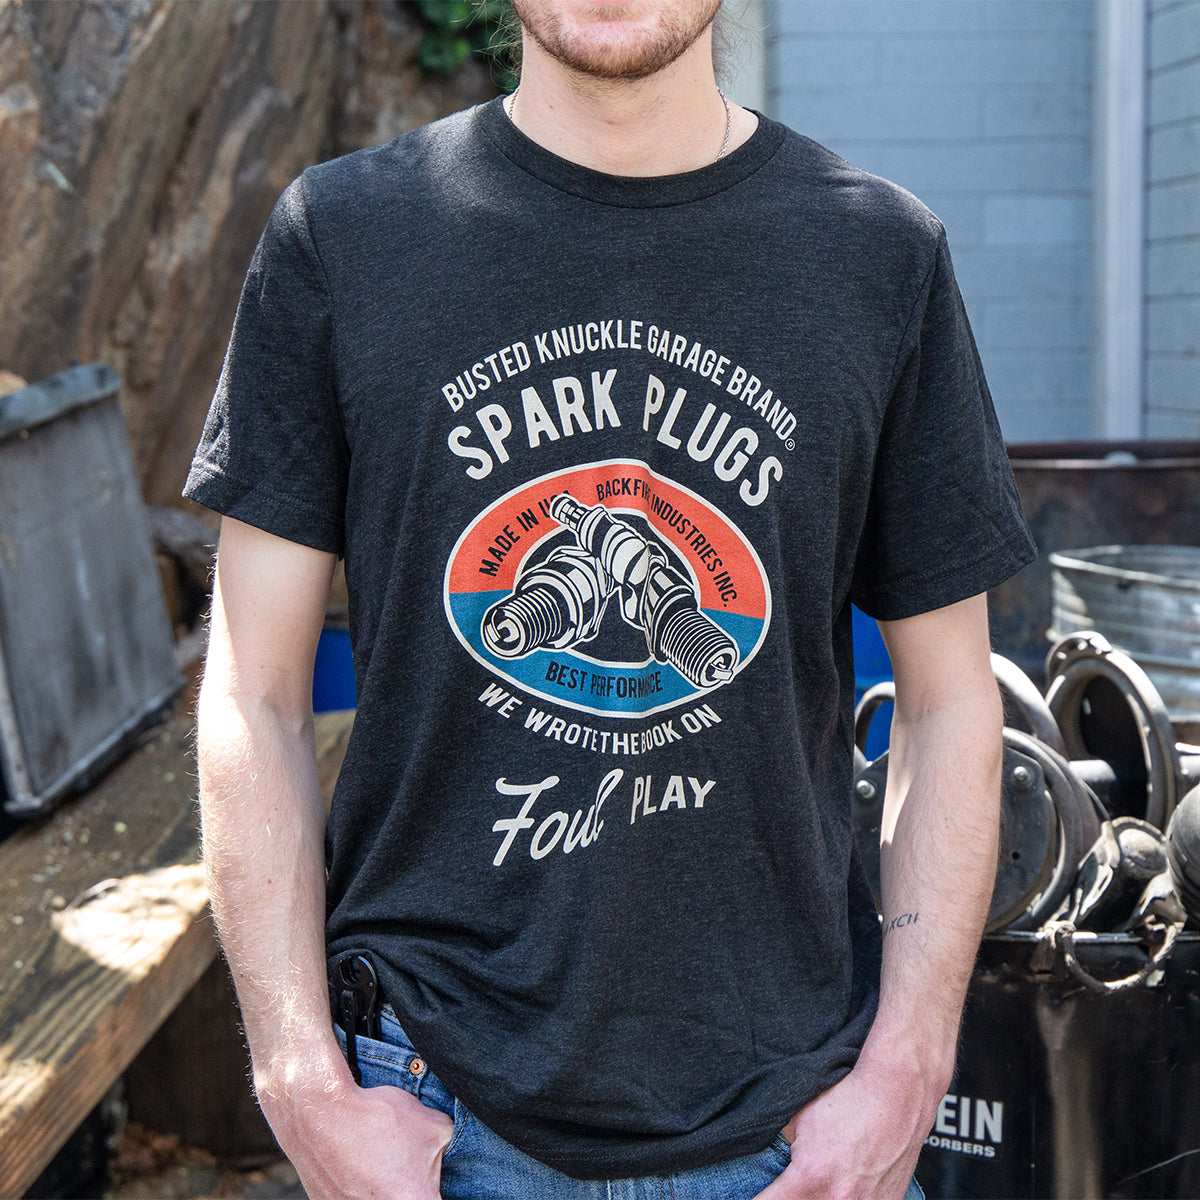 Busted Knuckle Garage Foul Play Spark Plug Carguy  T-Shirt